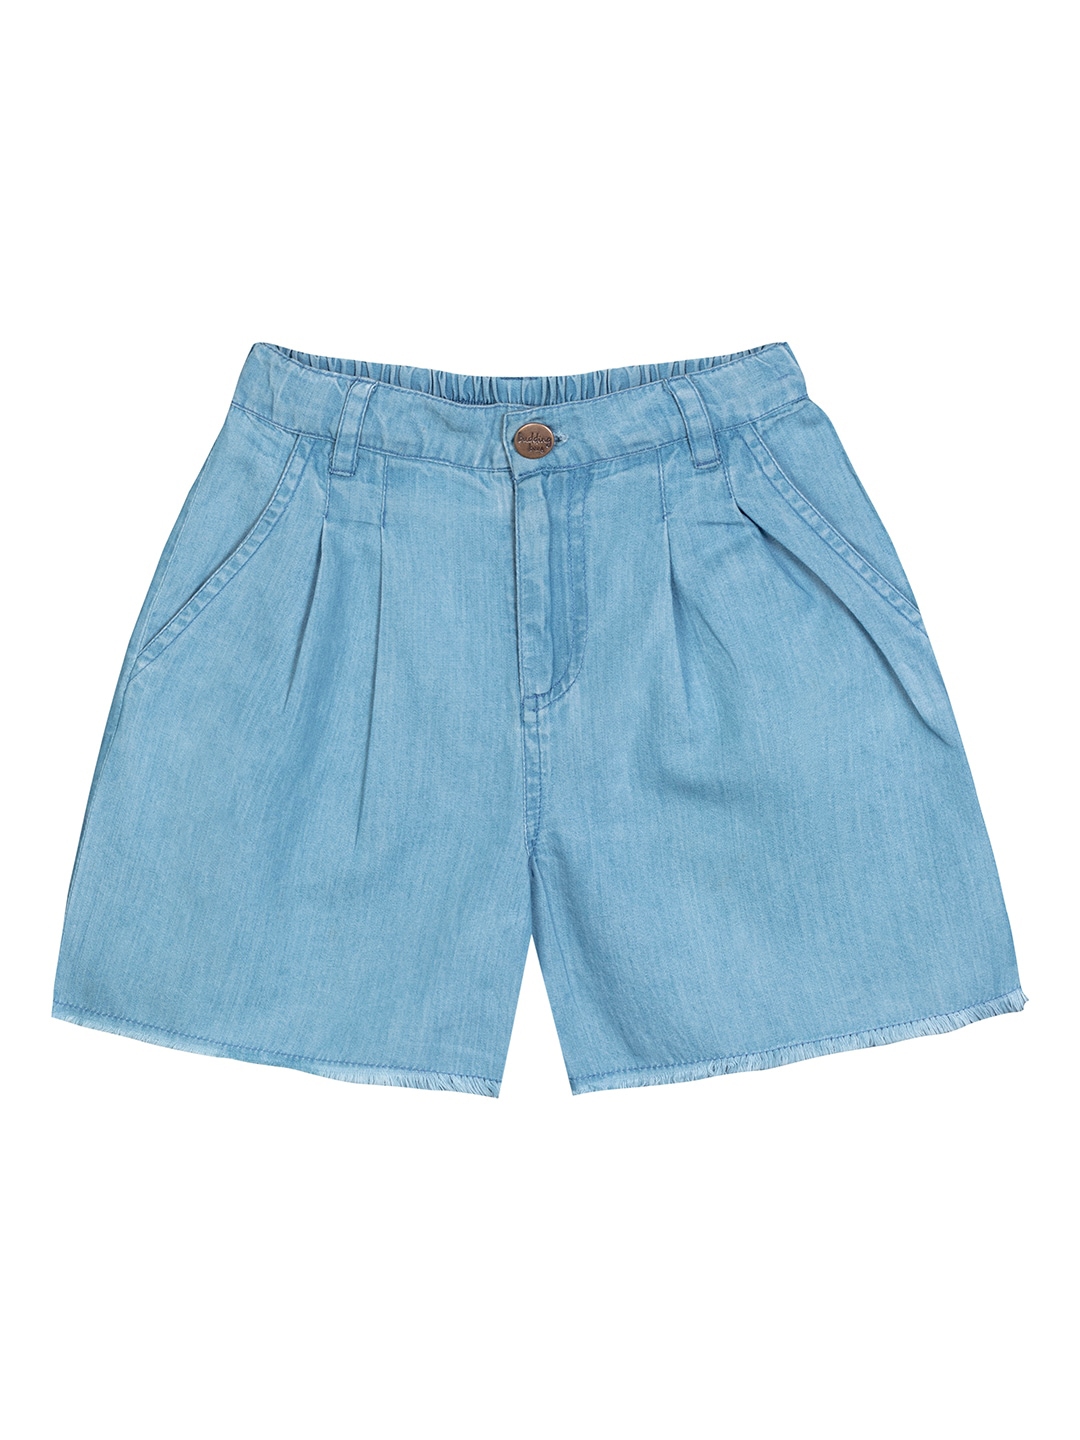 Buy Budding Bees Girls Blue Denim Shorts - Shorts for Girls 15338750 ...